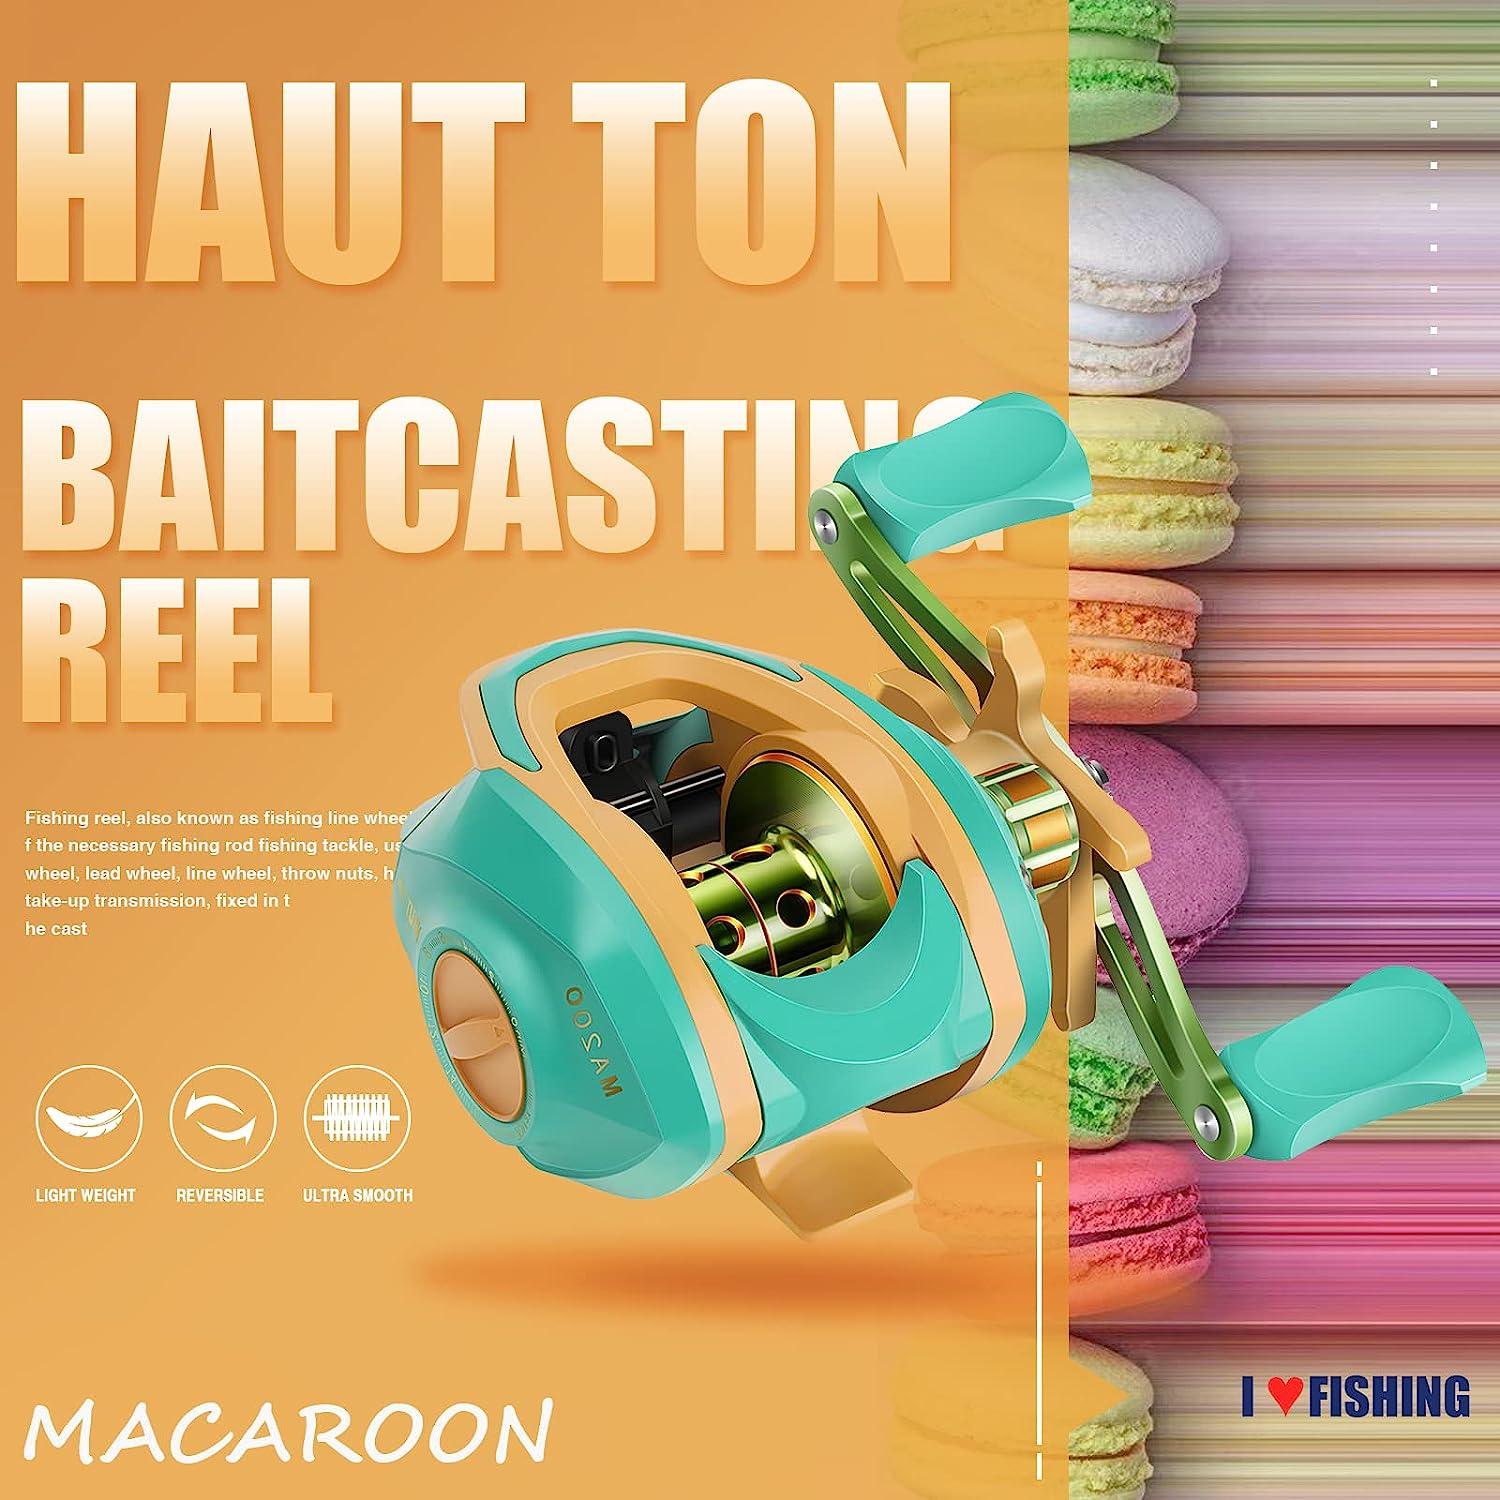 Hautton Baitcasting Fishing reels Macaroon Beginner's Edition